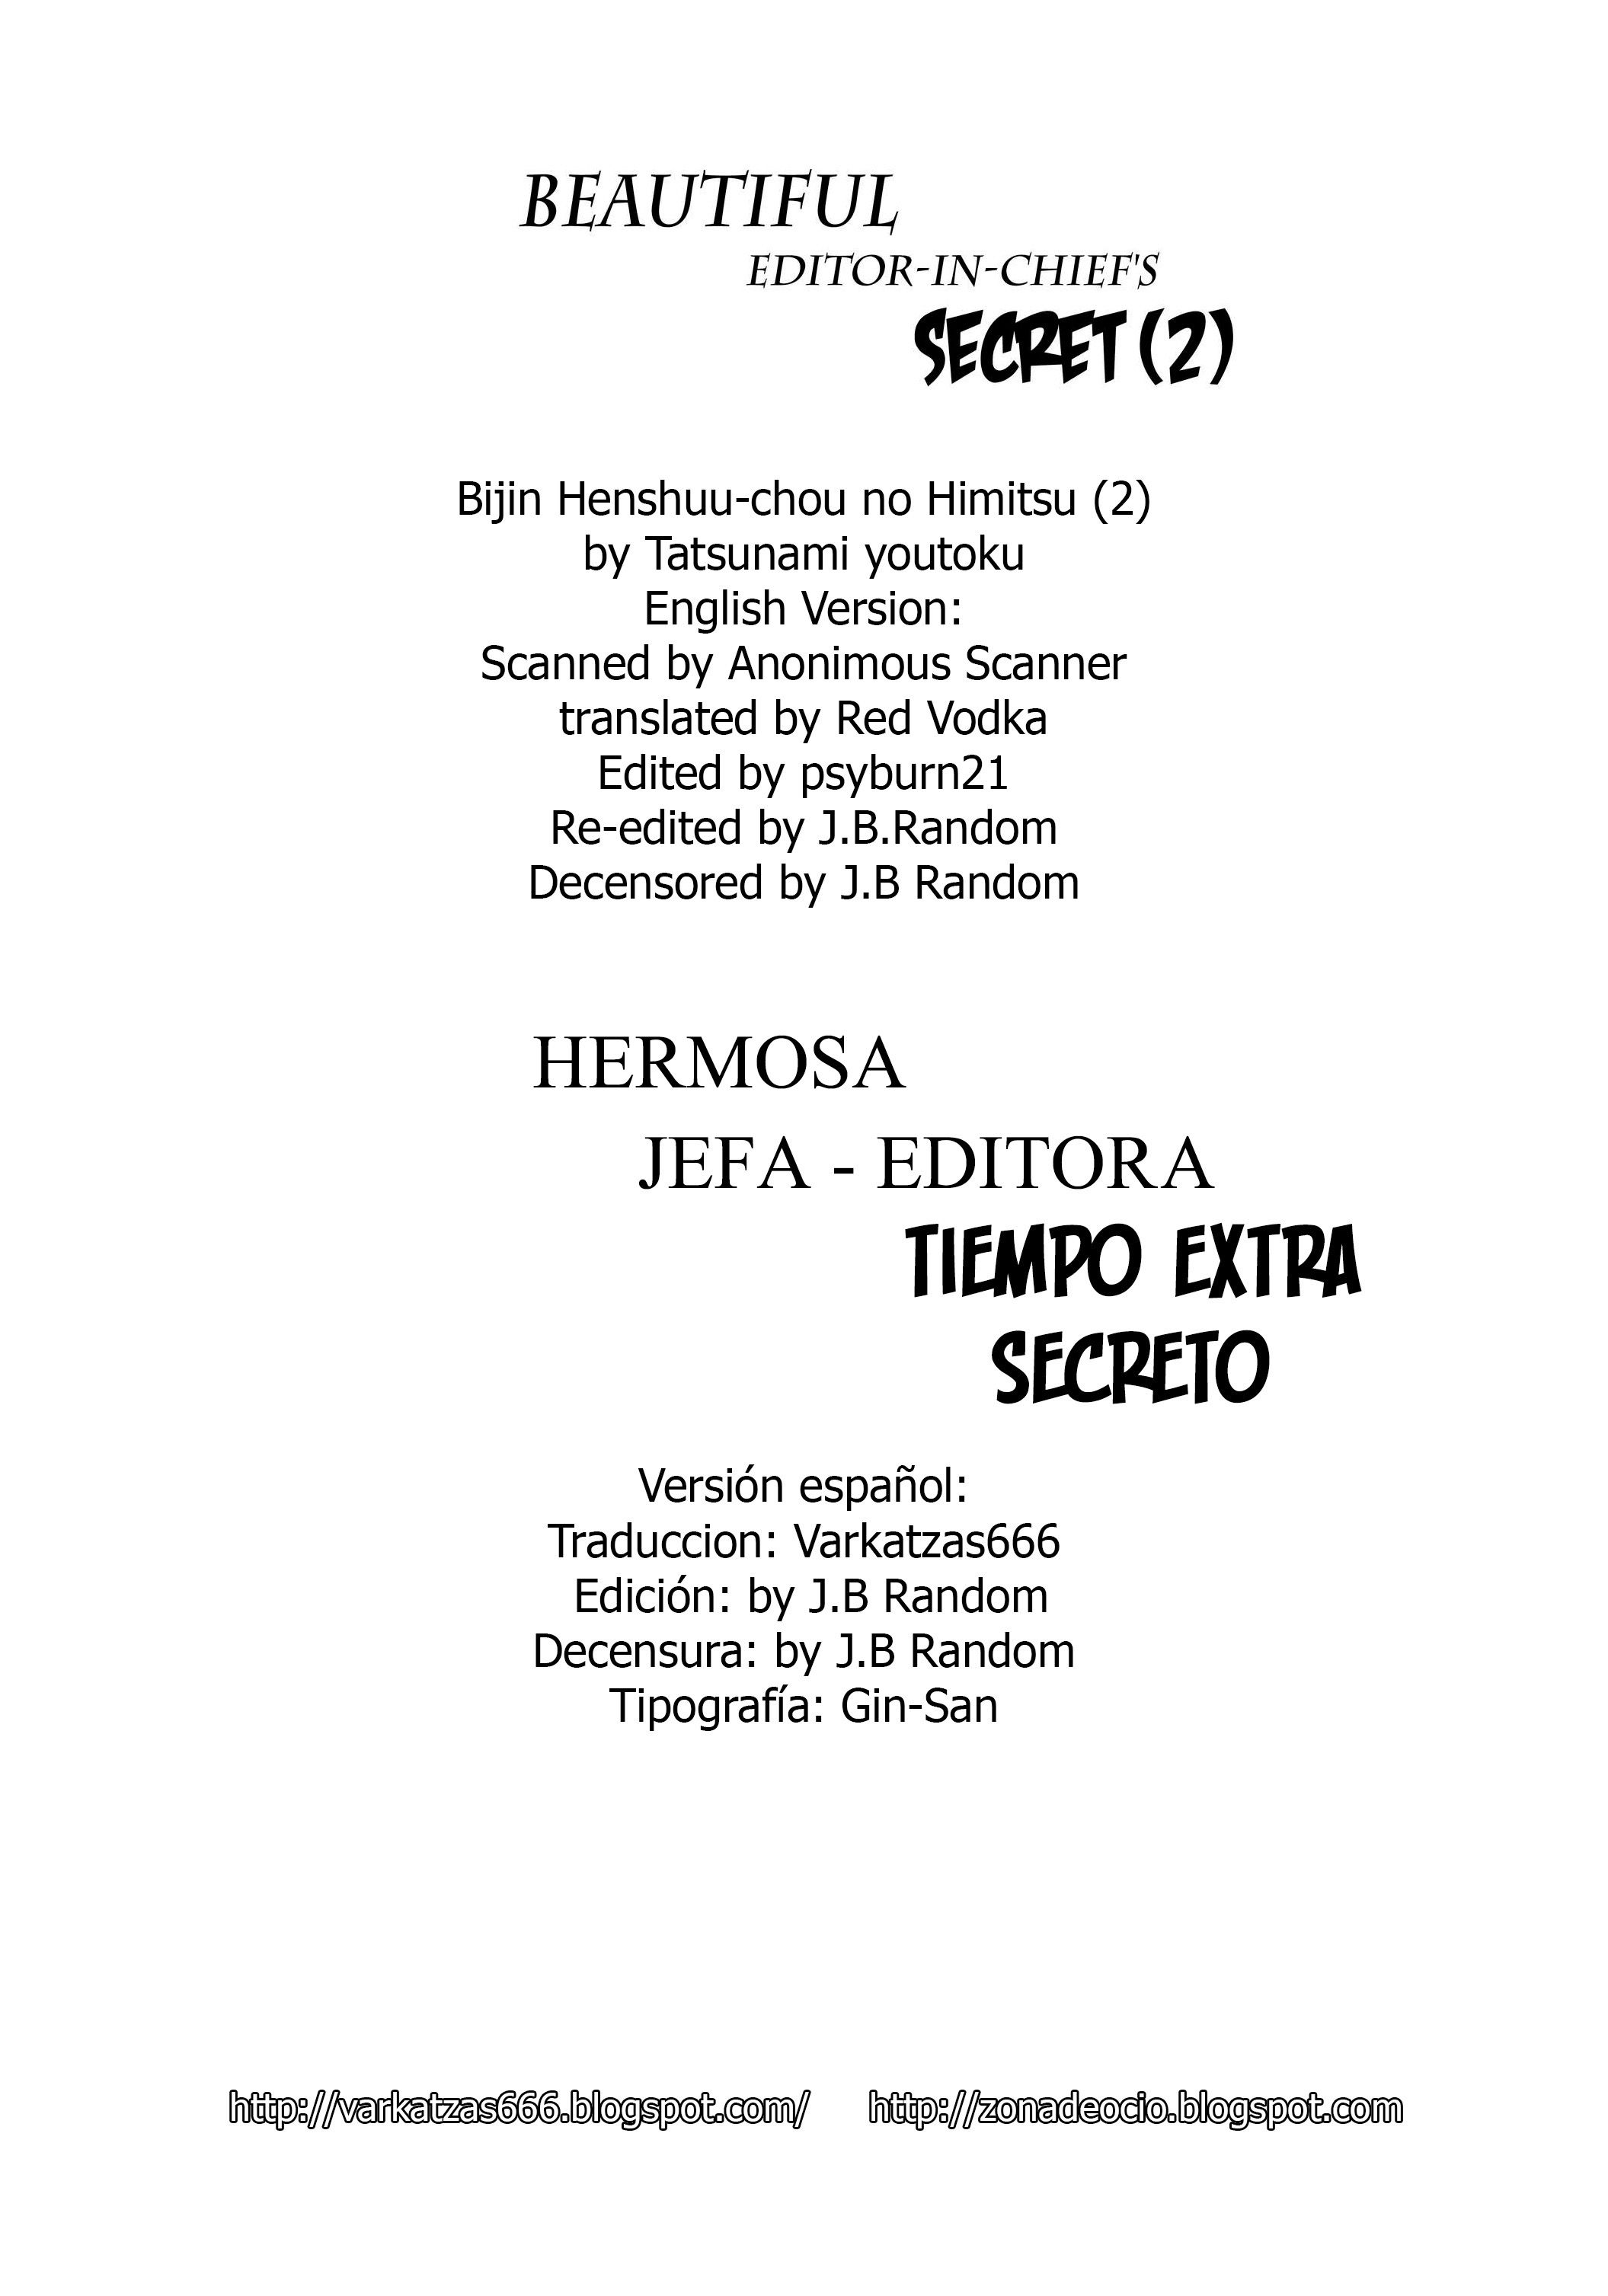 Hermosa Jefa Editora 2: Tiempo Extra Secreto (Sin Censura) - 1